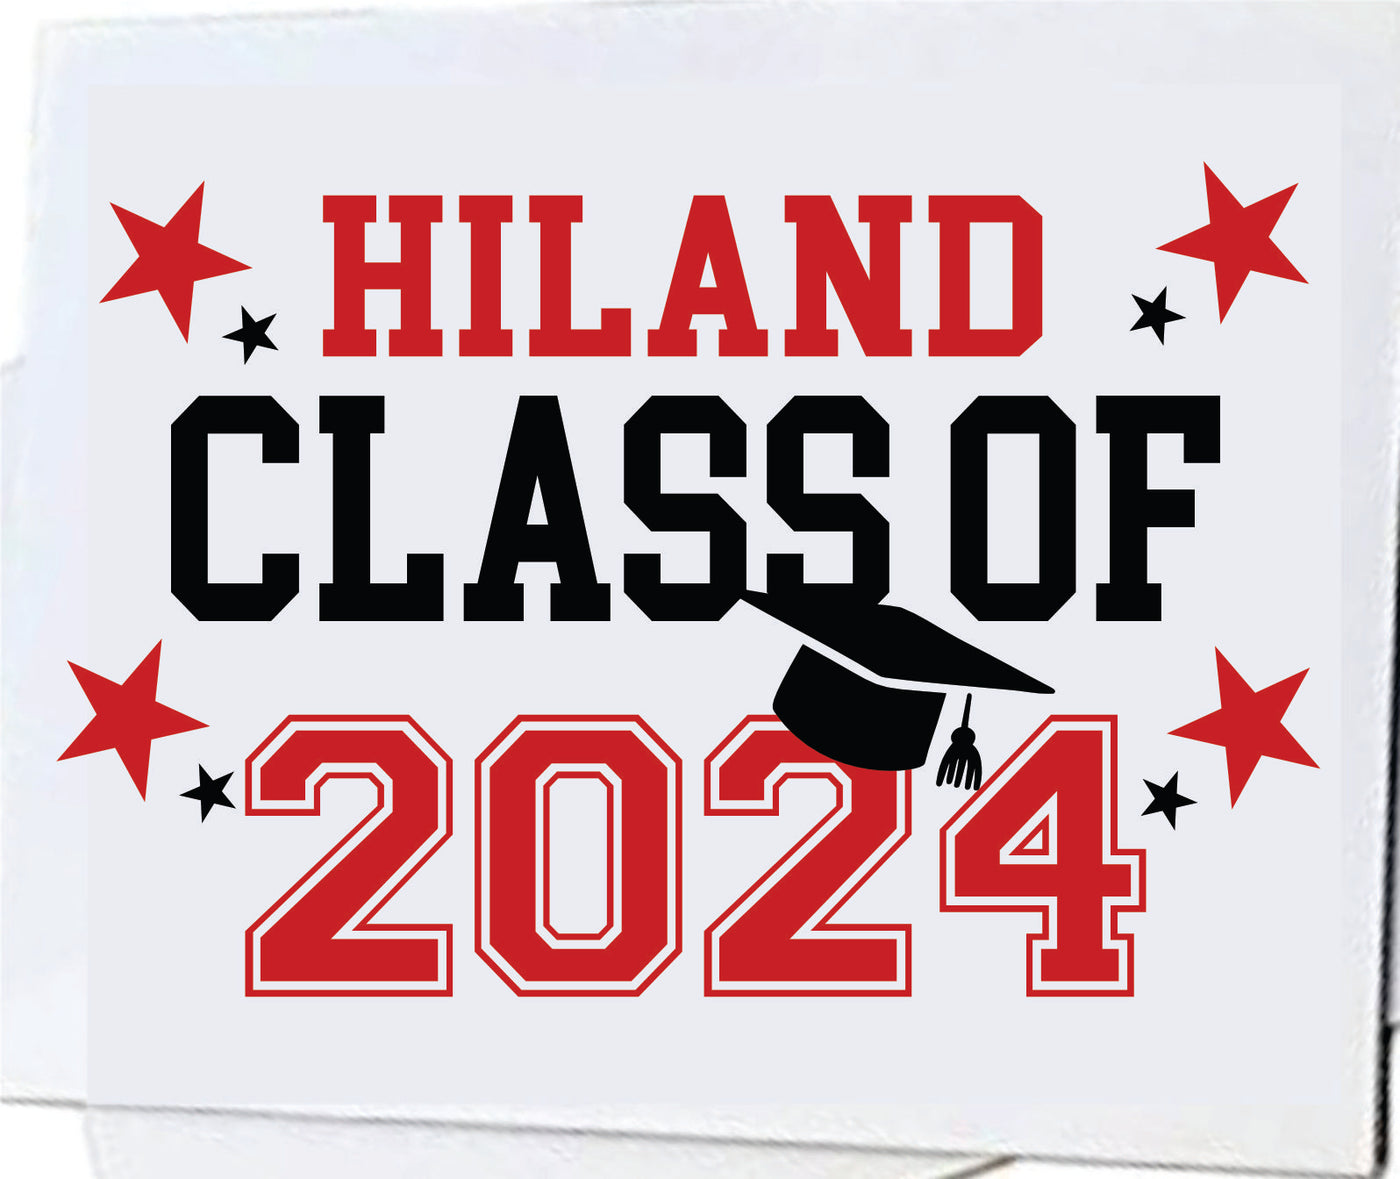 Class of 2024 Graduation Sign